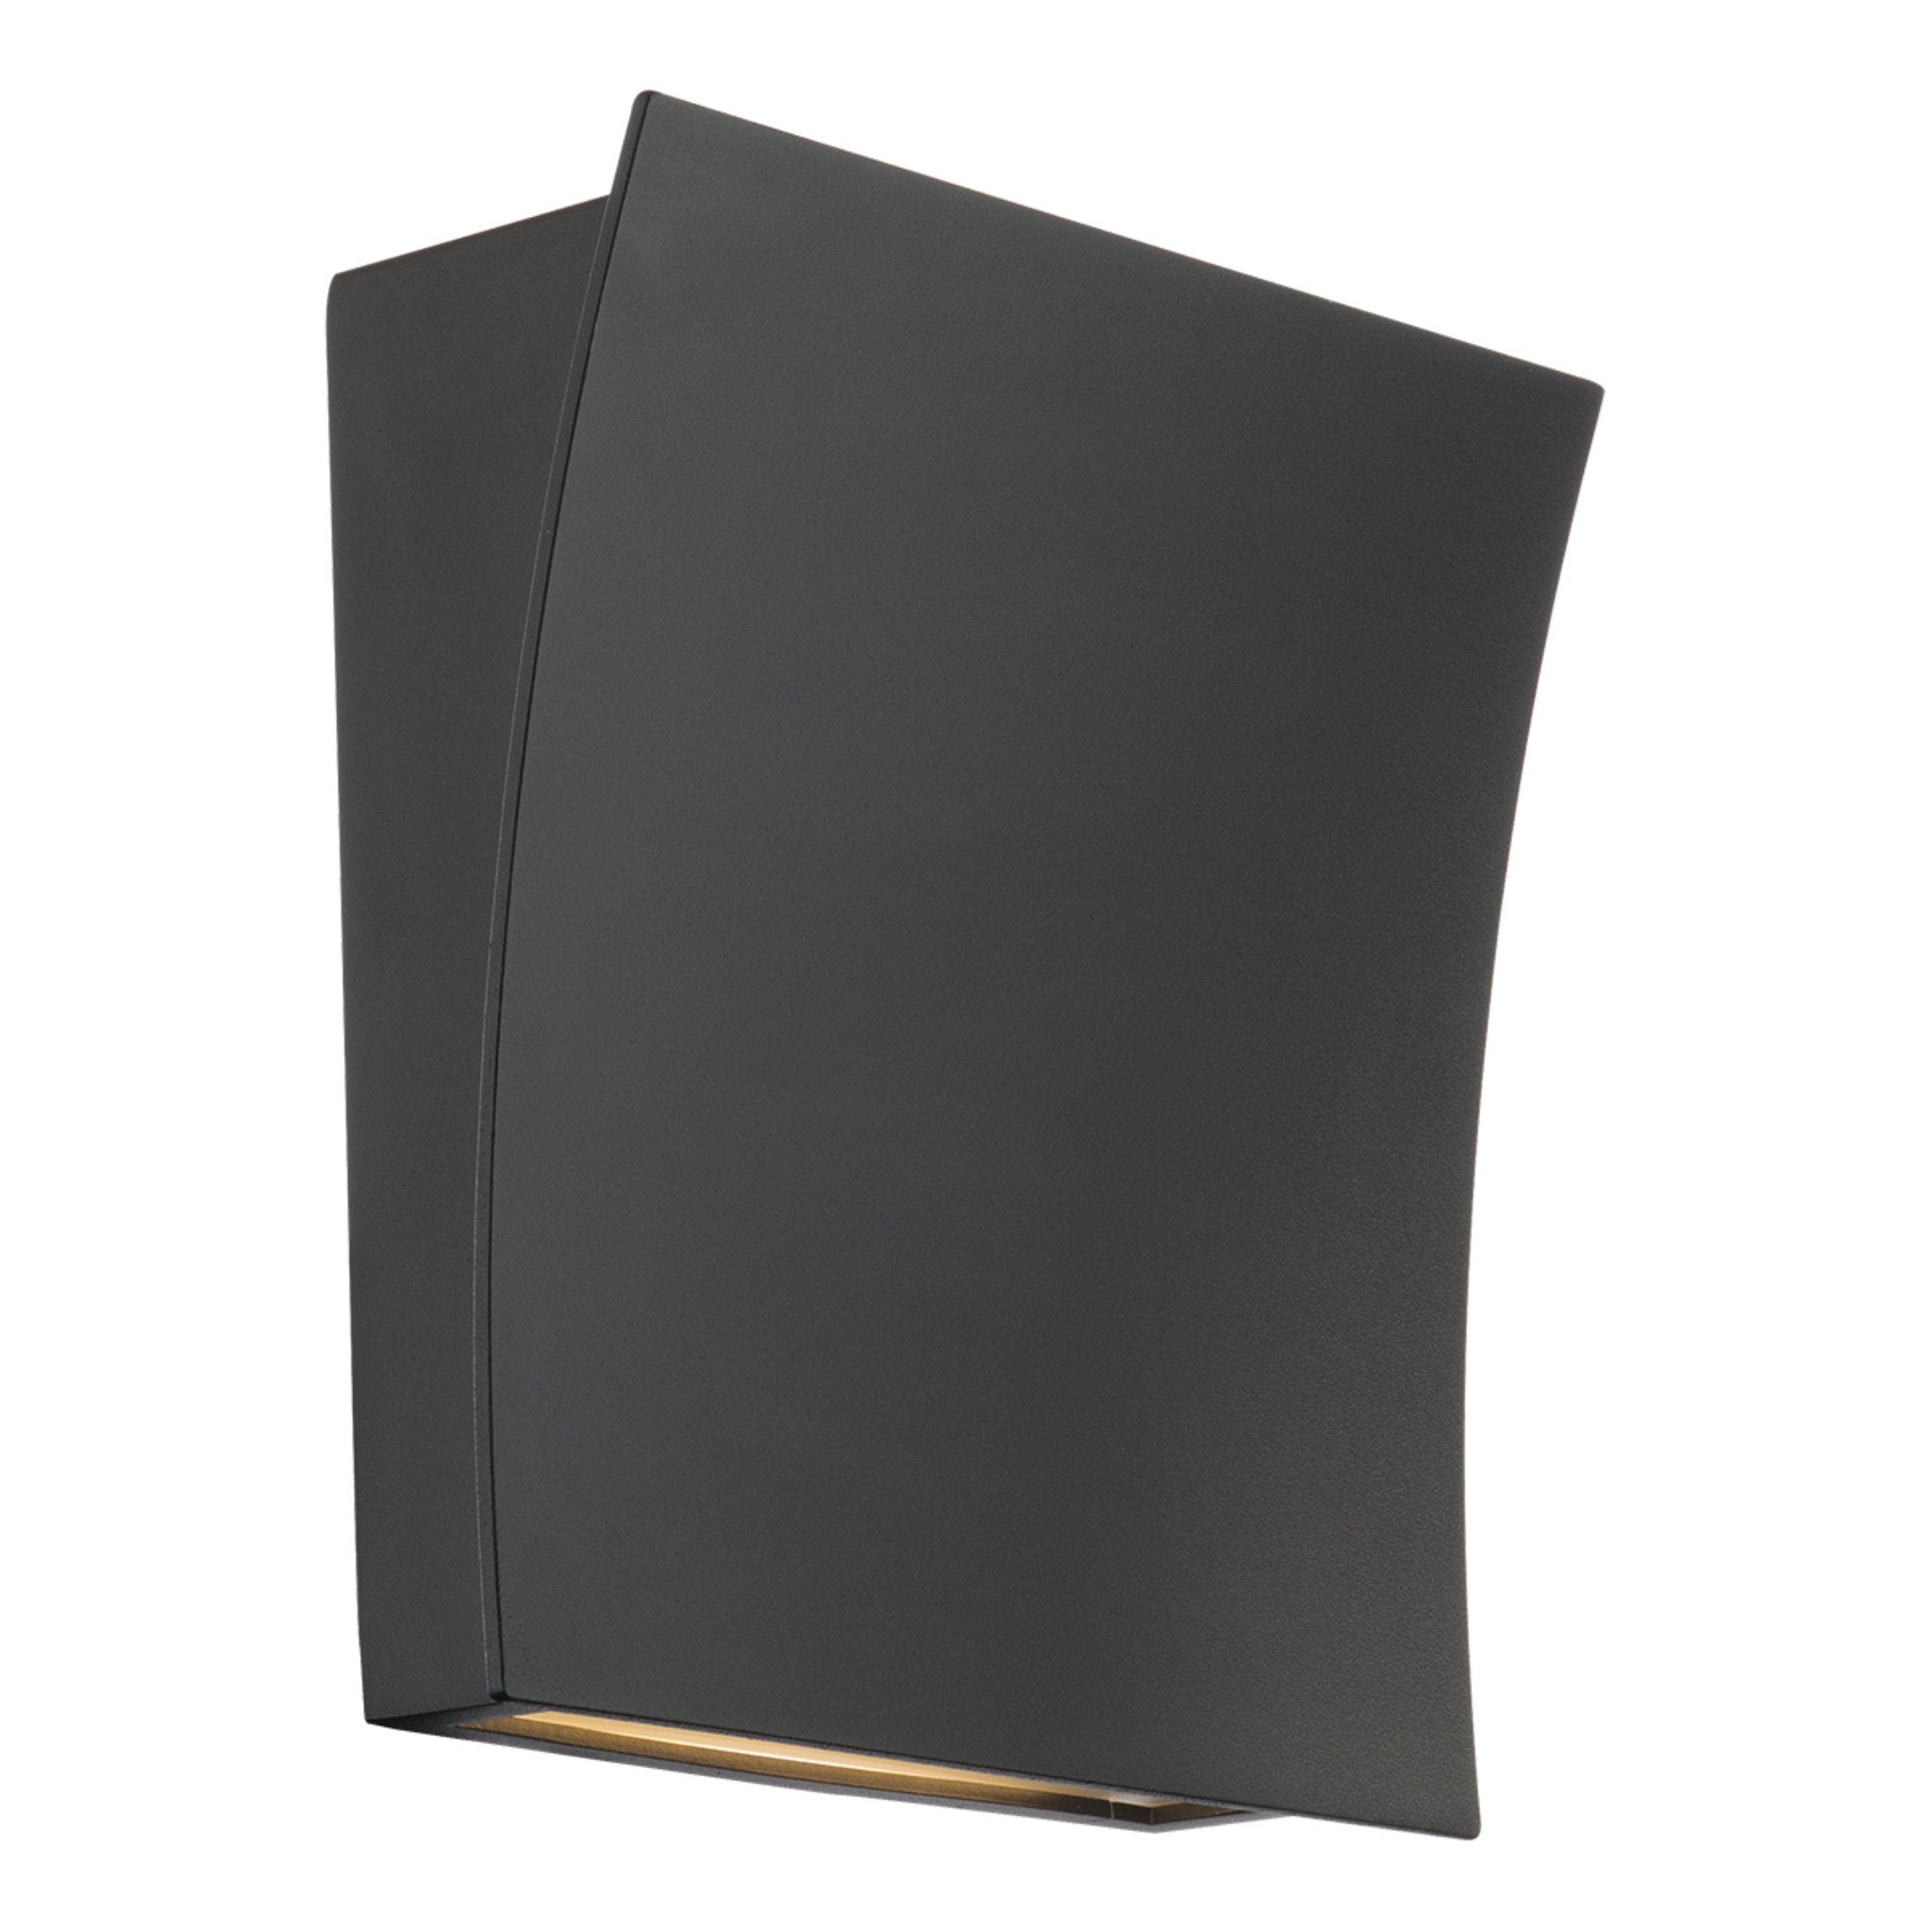 Modern Forms WS-27610-BK 3000K 21.5 Watt Slide LED Wall Sconce in Black